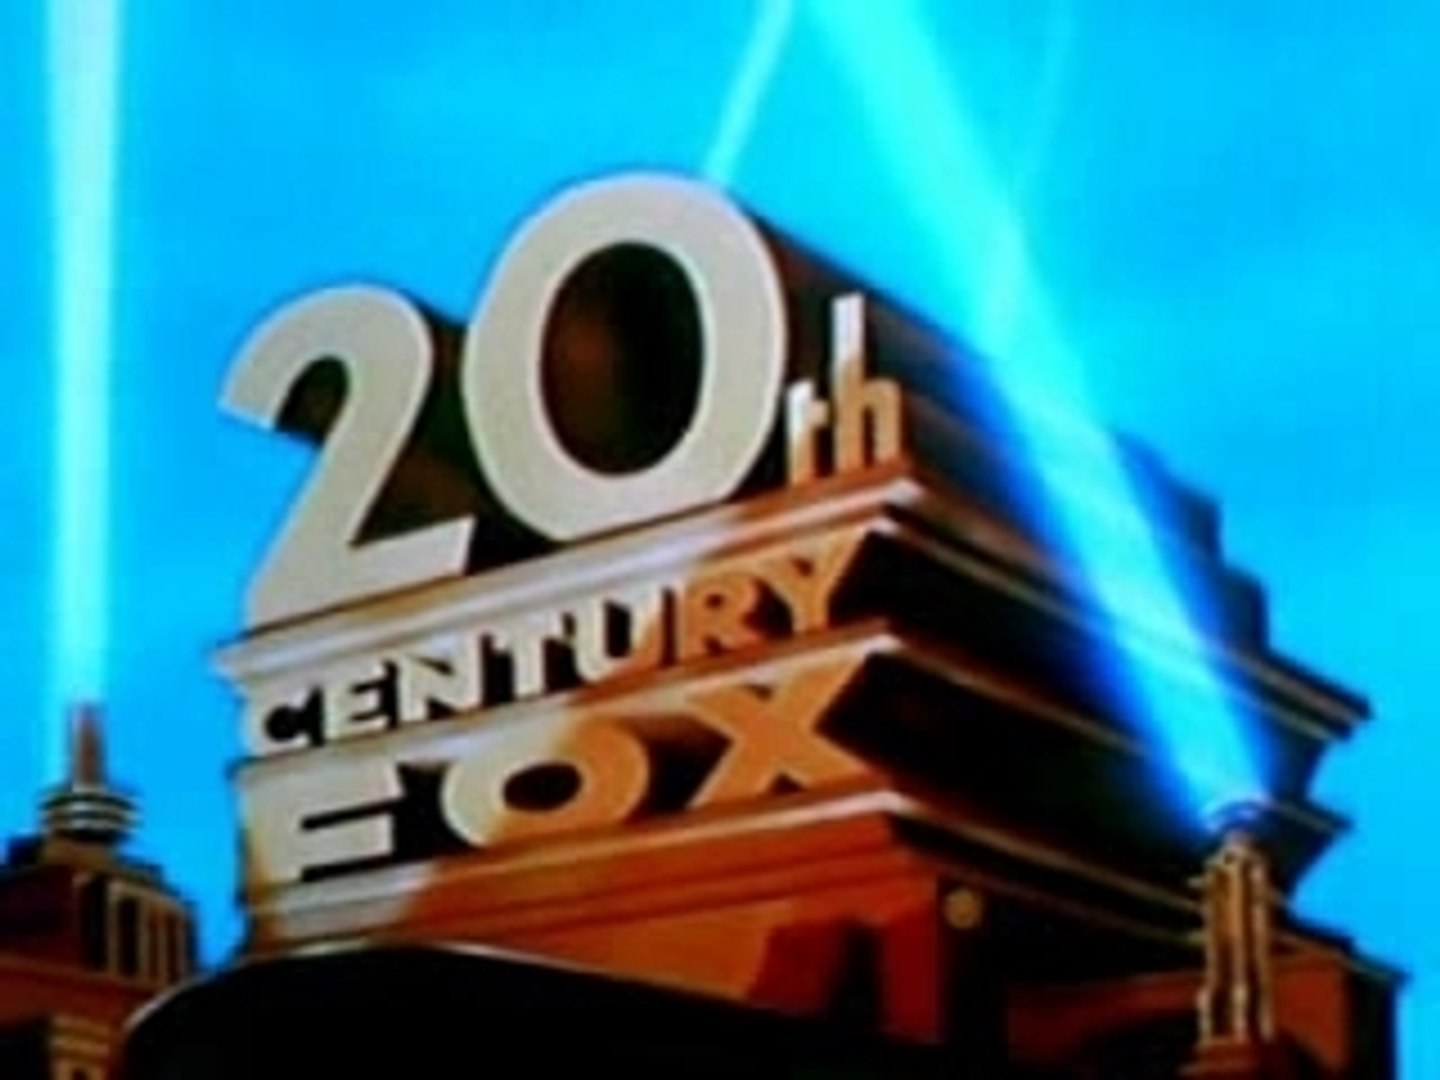 20th Century Fox Logo (1991) 